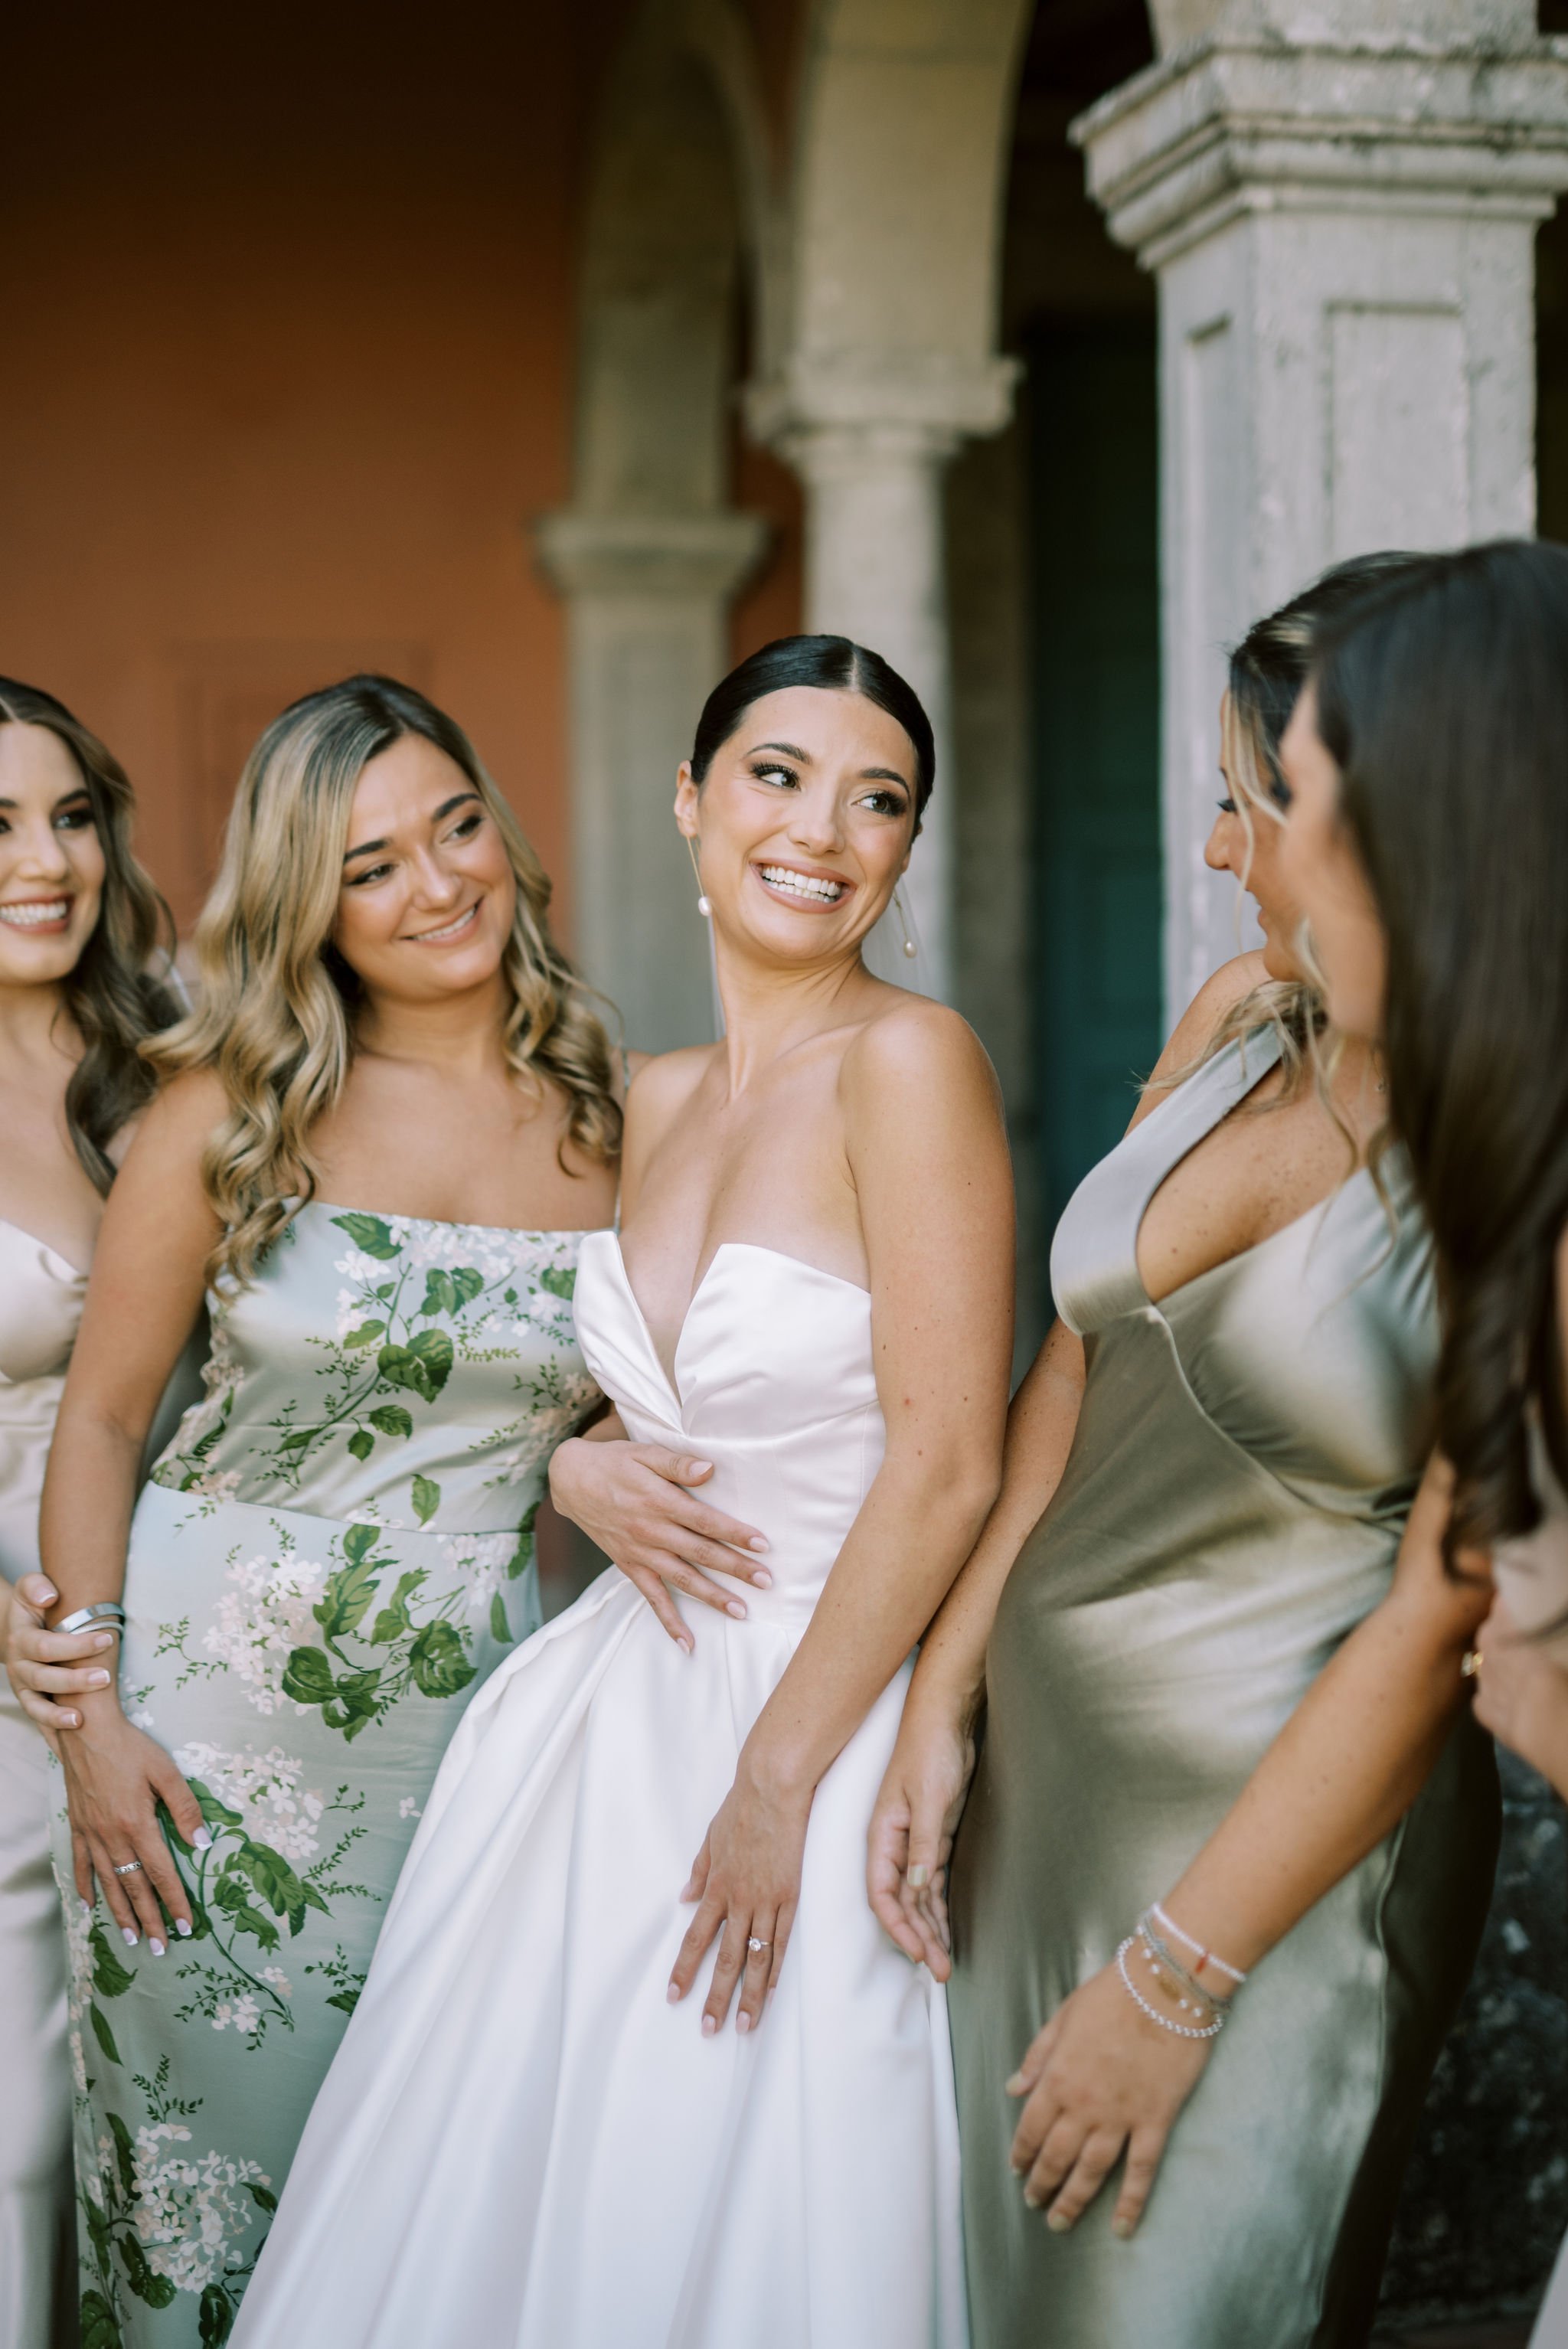 Smiling bride looking at her bridesmaids dressed in green bridesmaid dresses